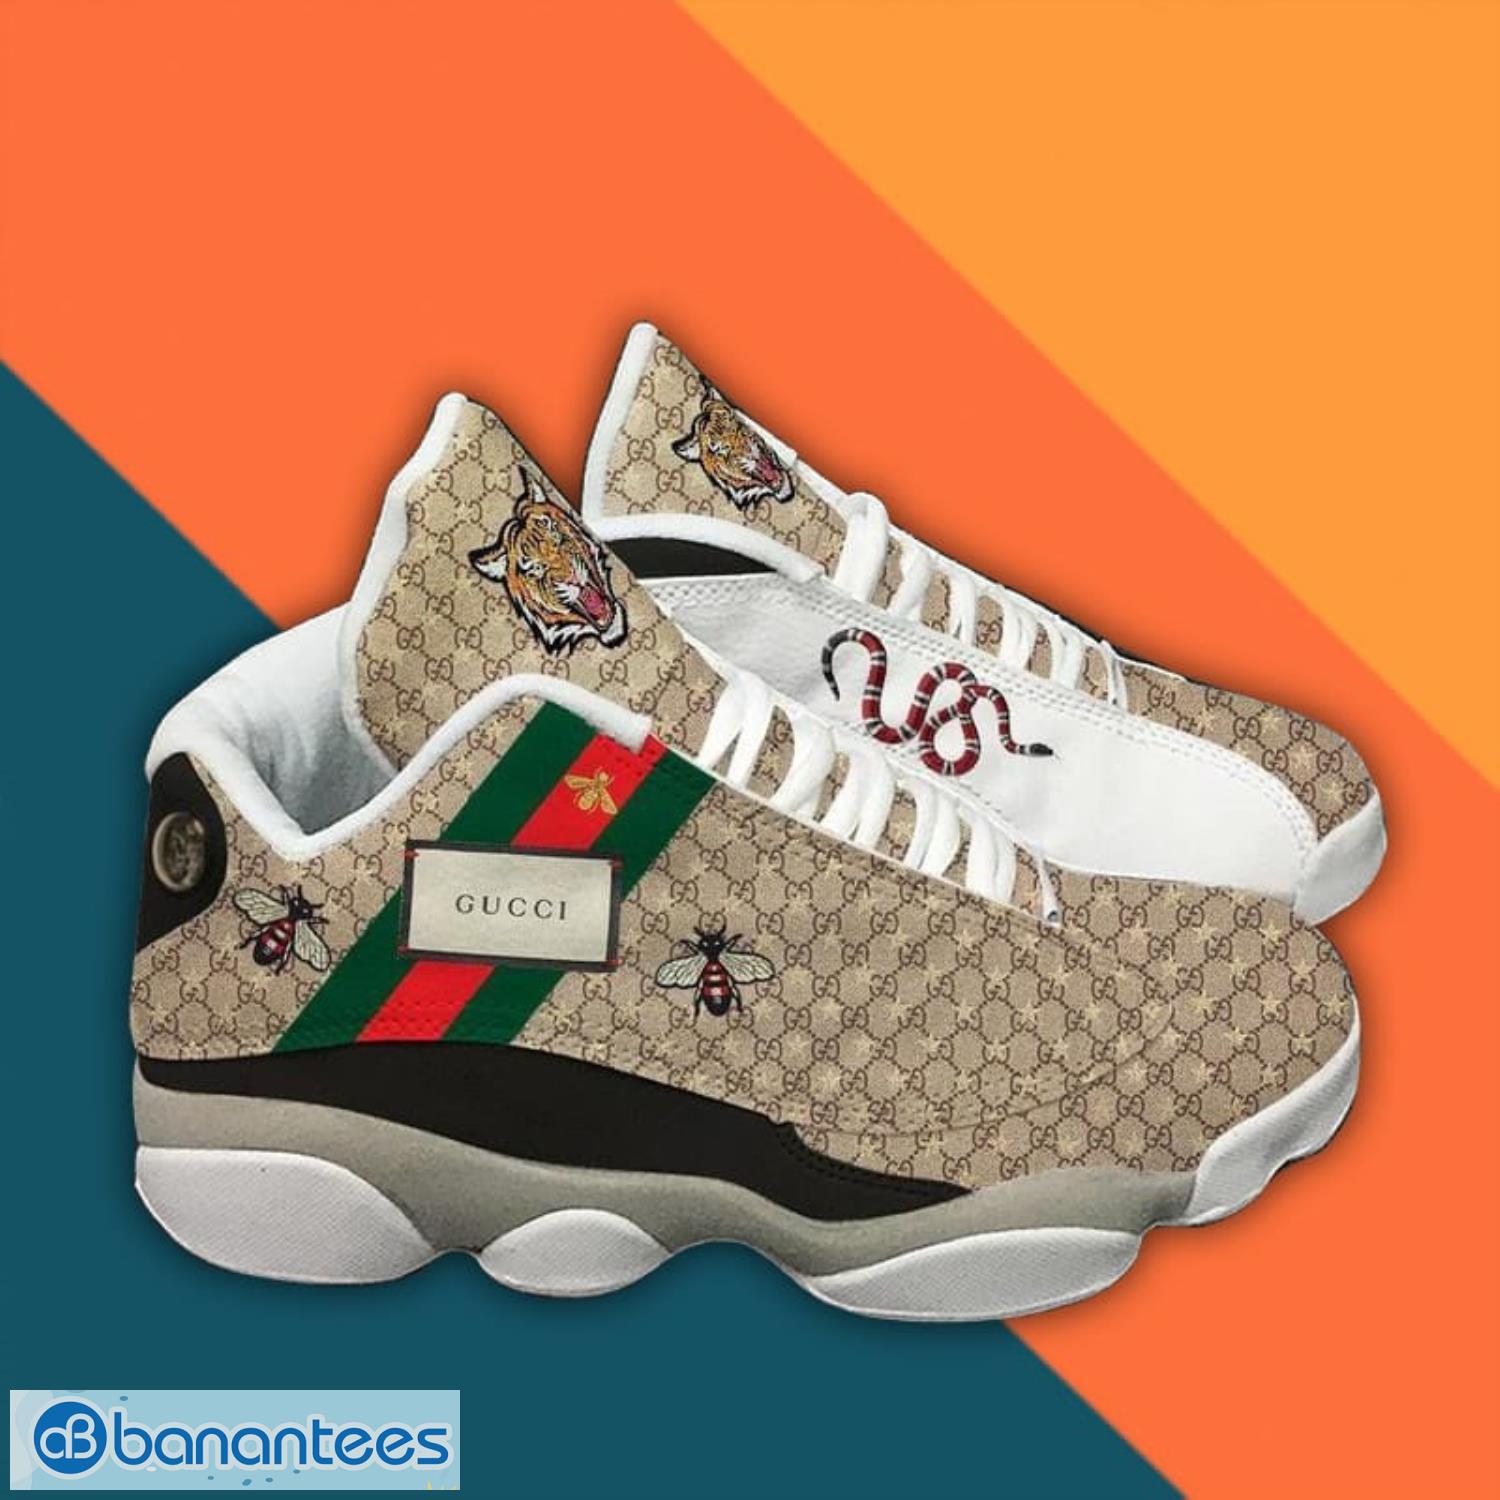 Gucci Bee And Tiger Air Jordan 13 Sneaker Shoes - Banantees